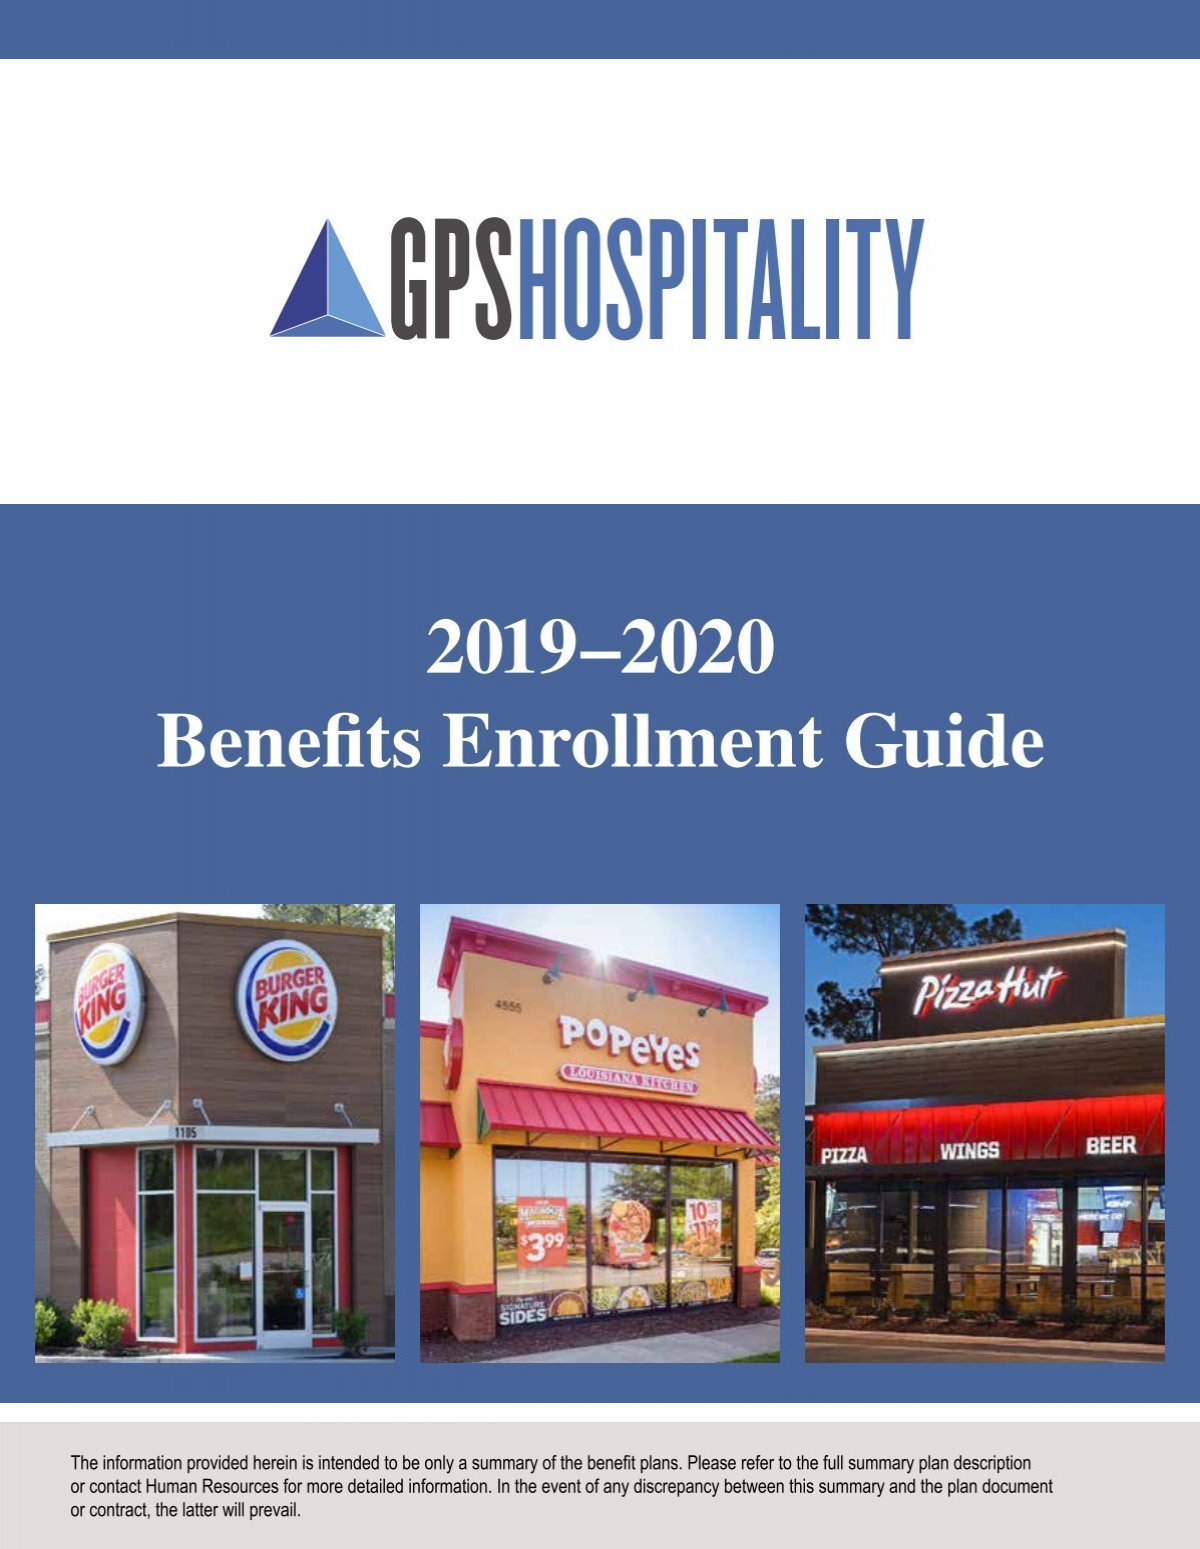 GPS Hospitality - Benefits Enrollment Guide